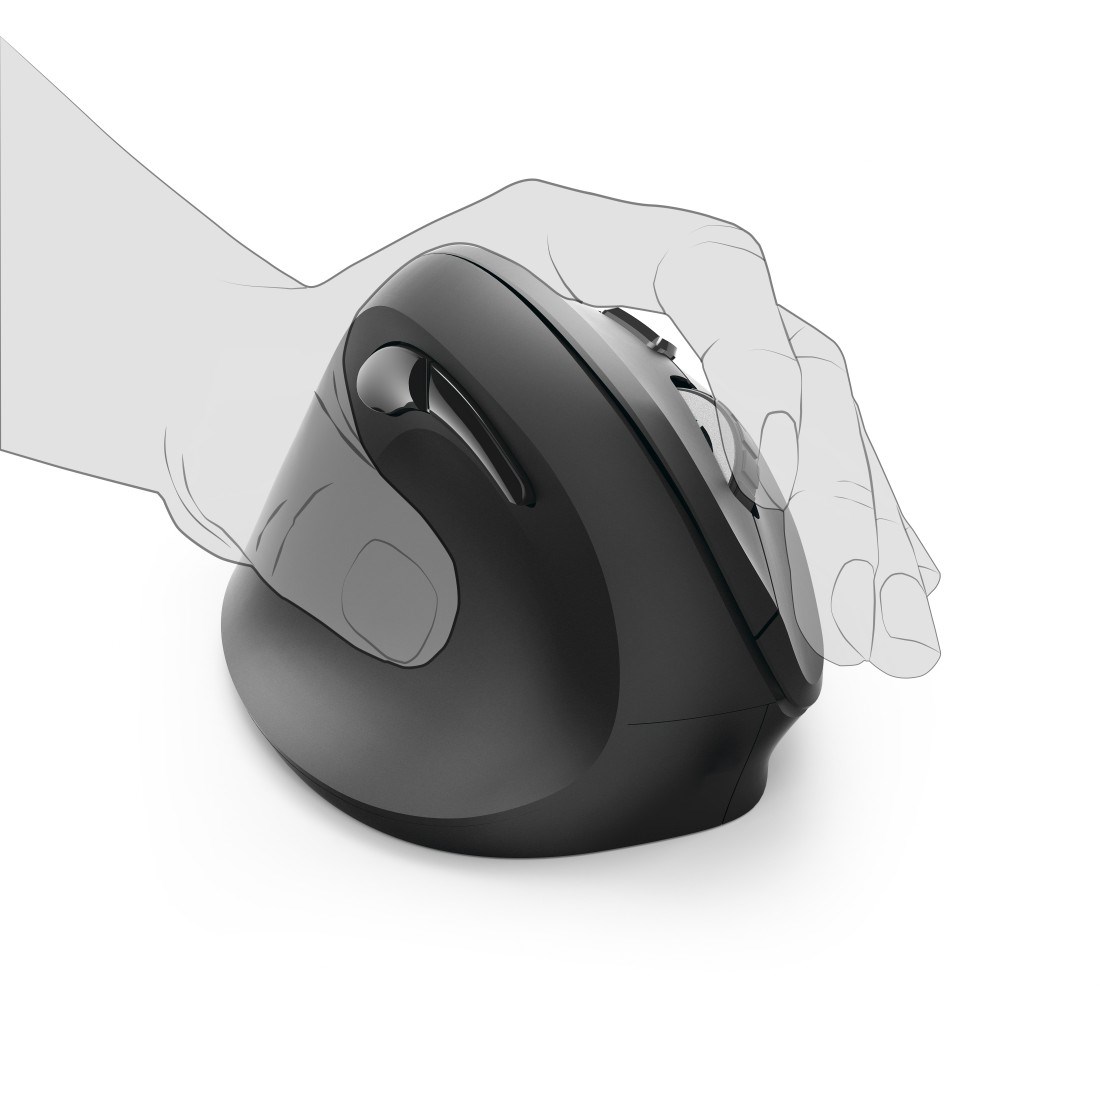 Vertikálna ergonomická bezdrôtová myš Hama EMW-500L, ľavá, čierna3 